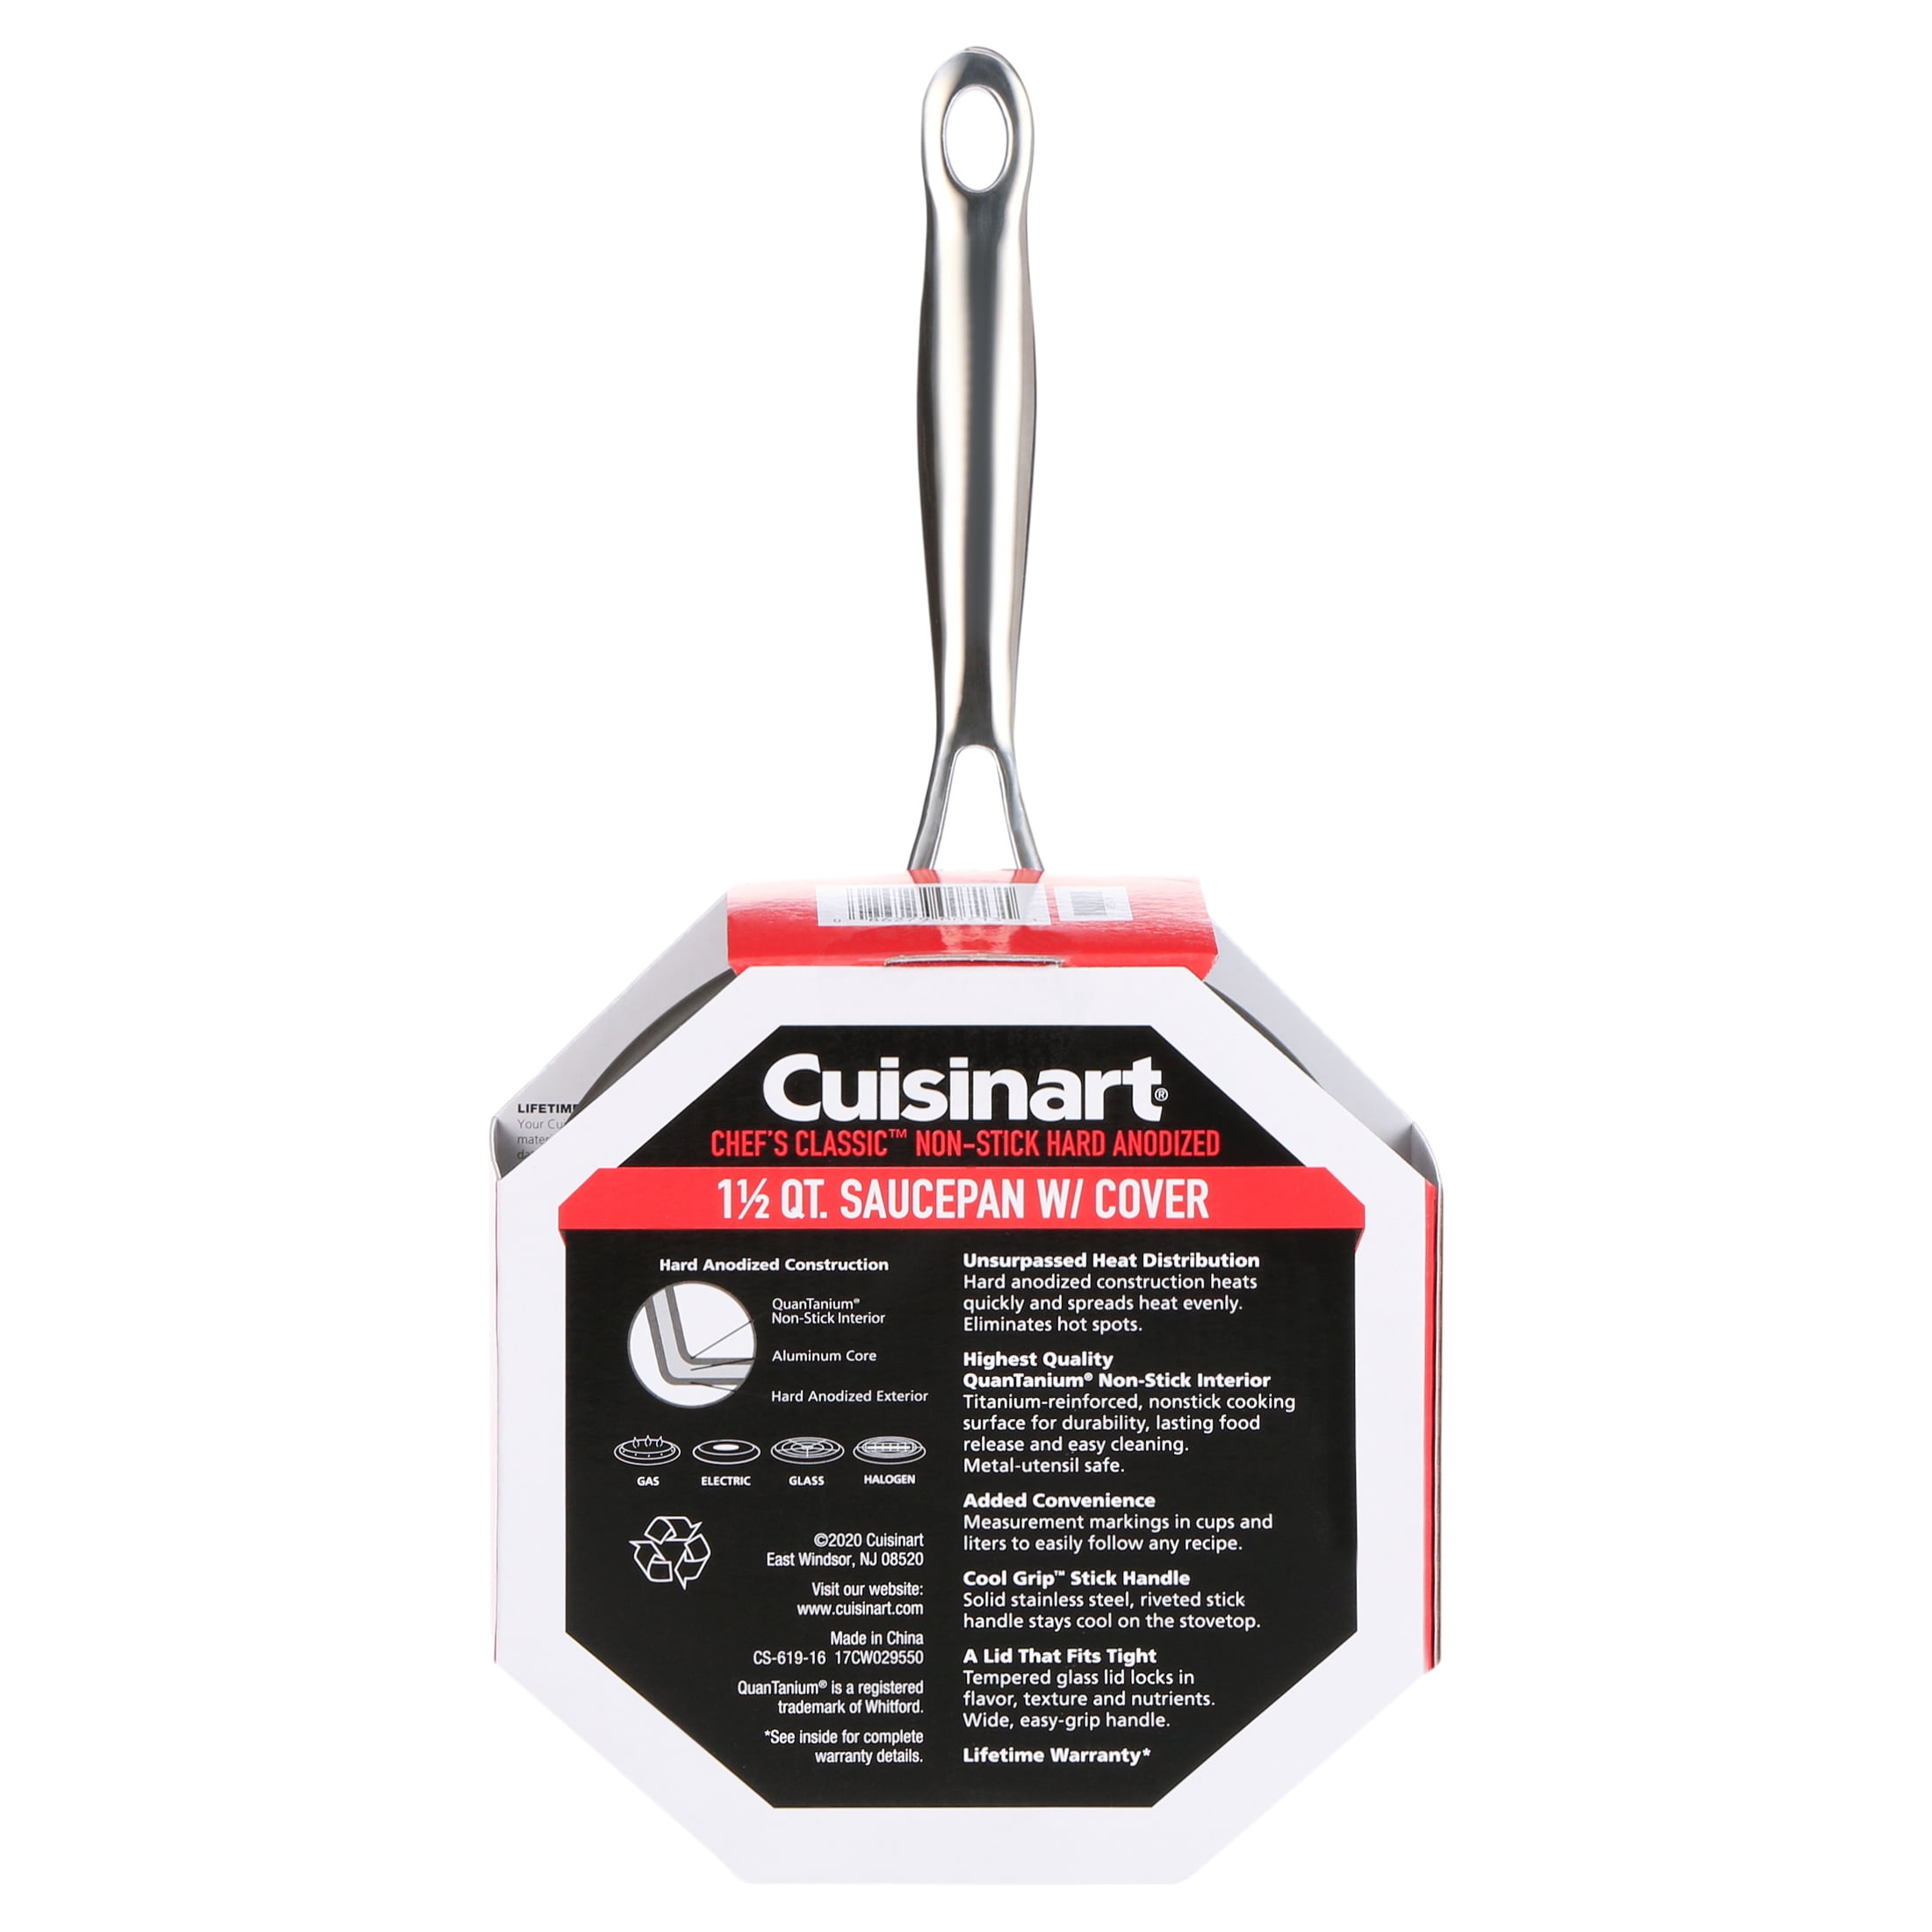 Cuisinart® Chef's Classic 1.5-qt. Stainless Steel Saucepan